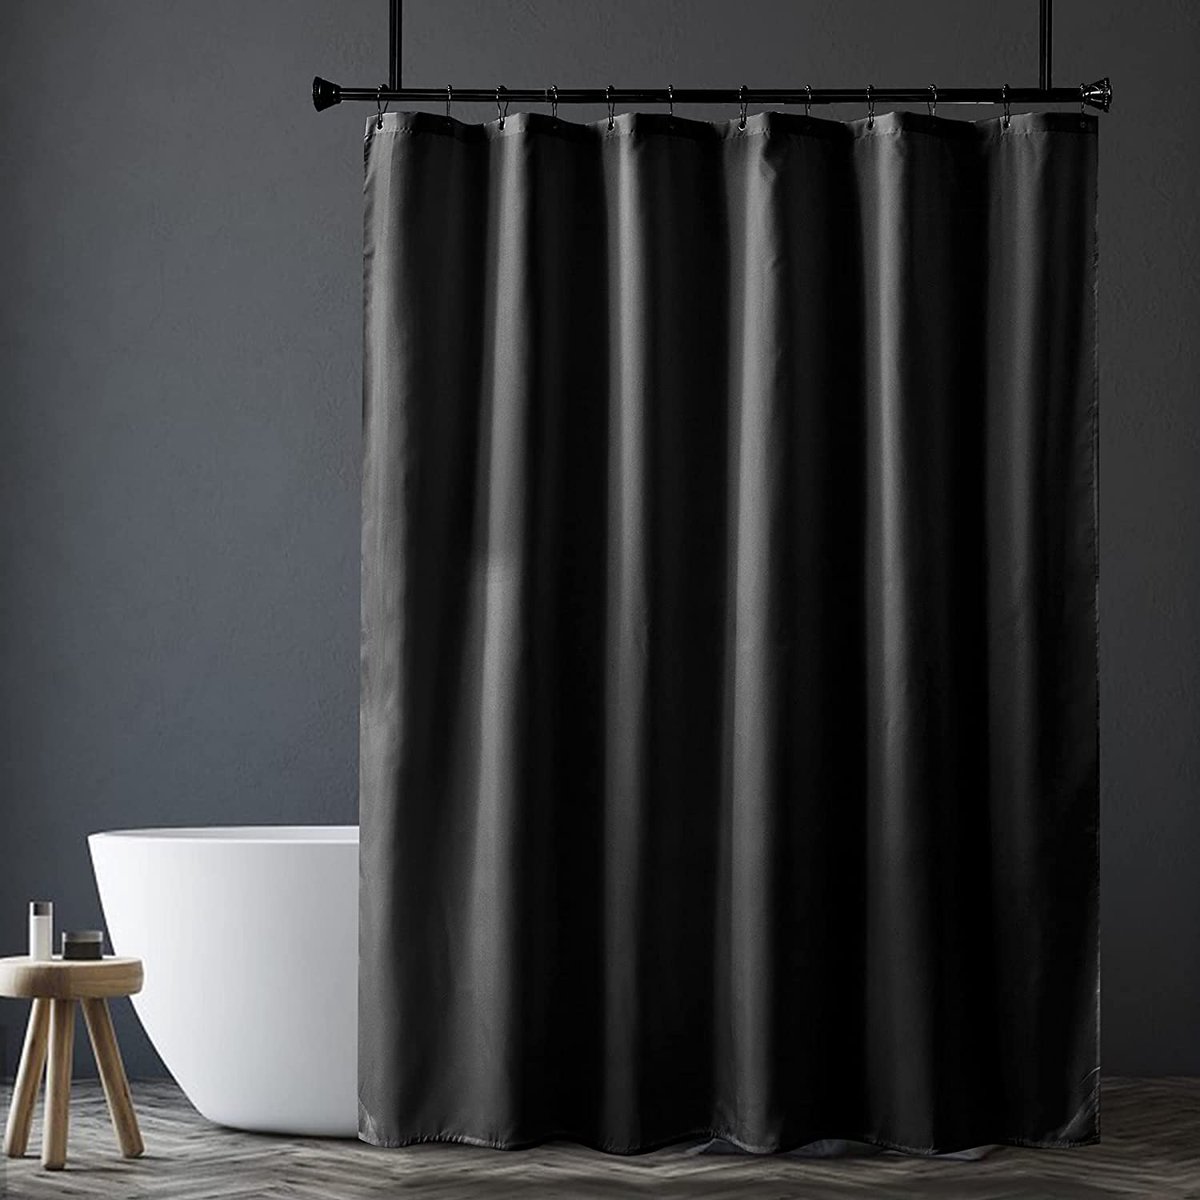 Livetti Douchegordijn met Ringen Shower Curtain 180x200cm Zwart